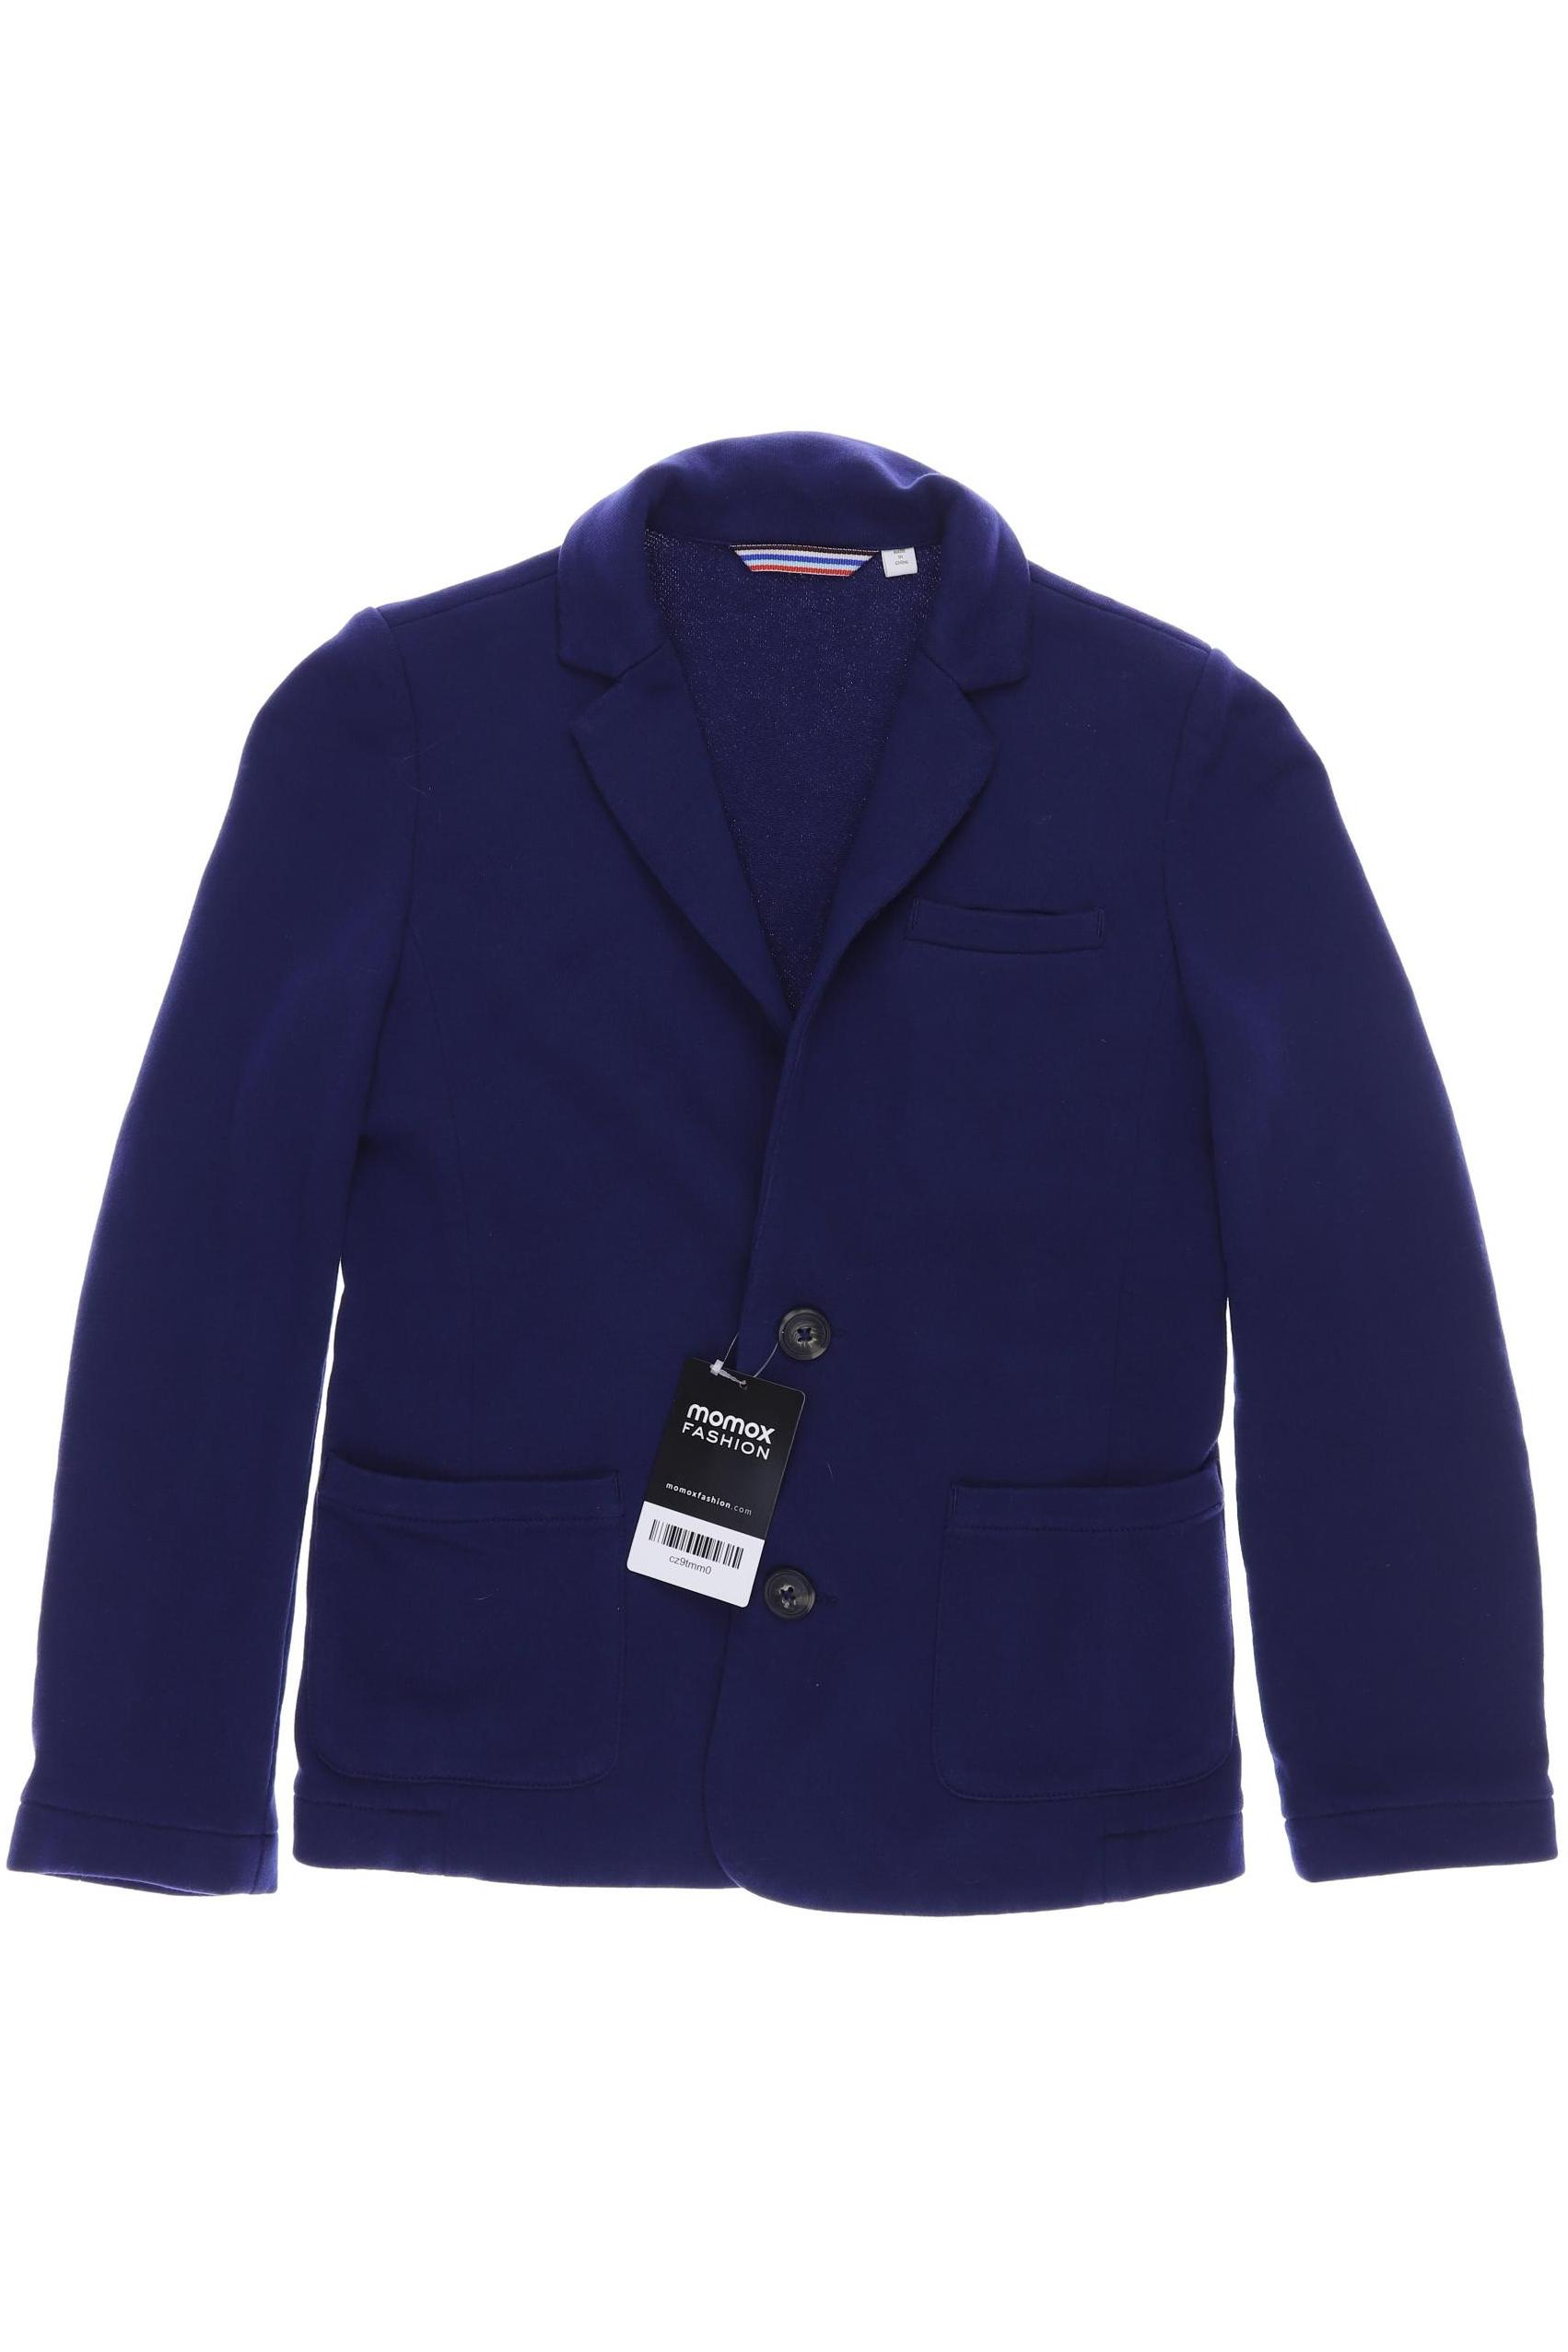 Mini Boden Damen Jacke, marineblau, Gr. 134 von Mini Boden